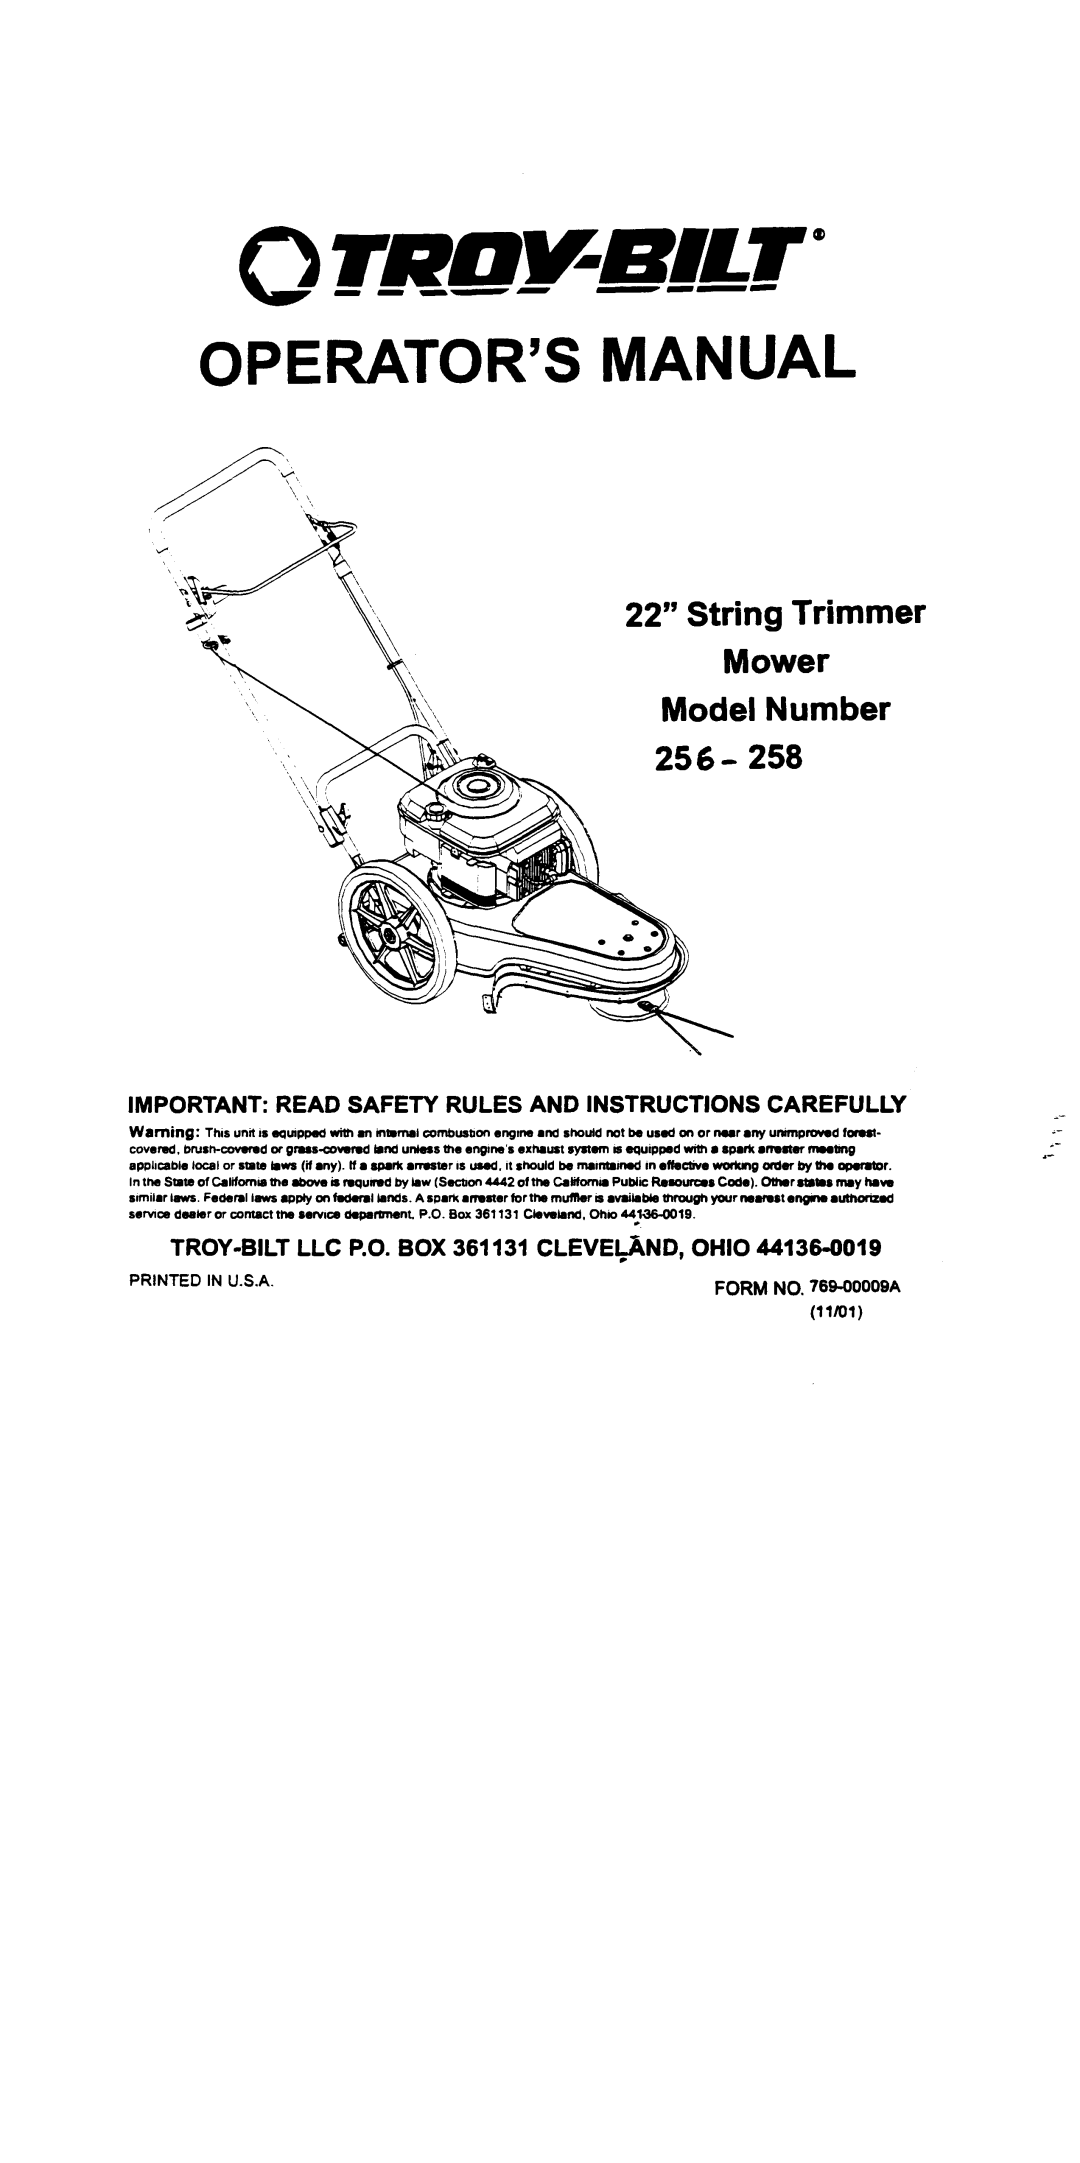 Troy-Bilt 258 manual Operator’s Manual, 22” String Trimmer Mower, Model, TROY-BILT LLC P.O. BOX 361131 CLEVELAND, OHIO 